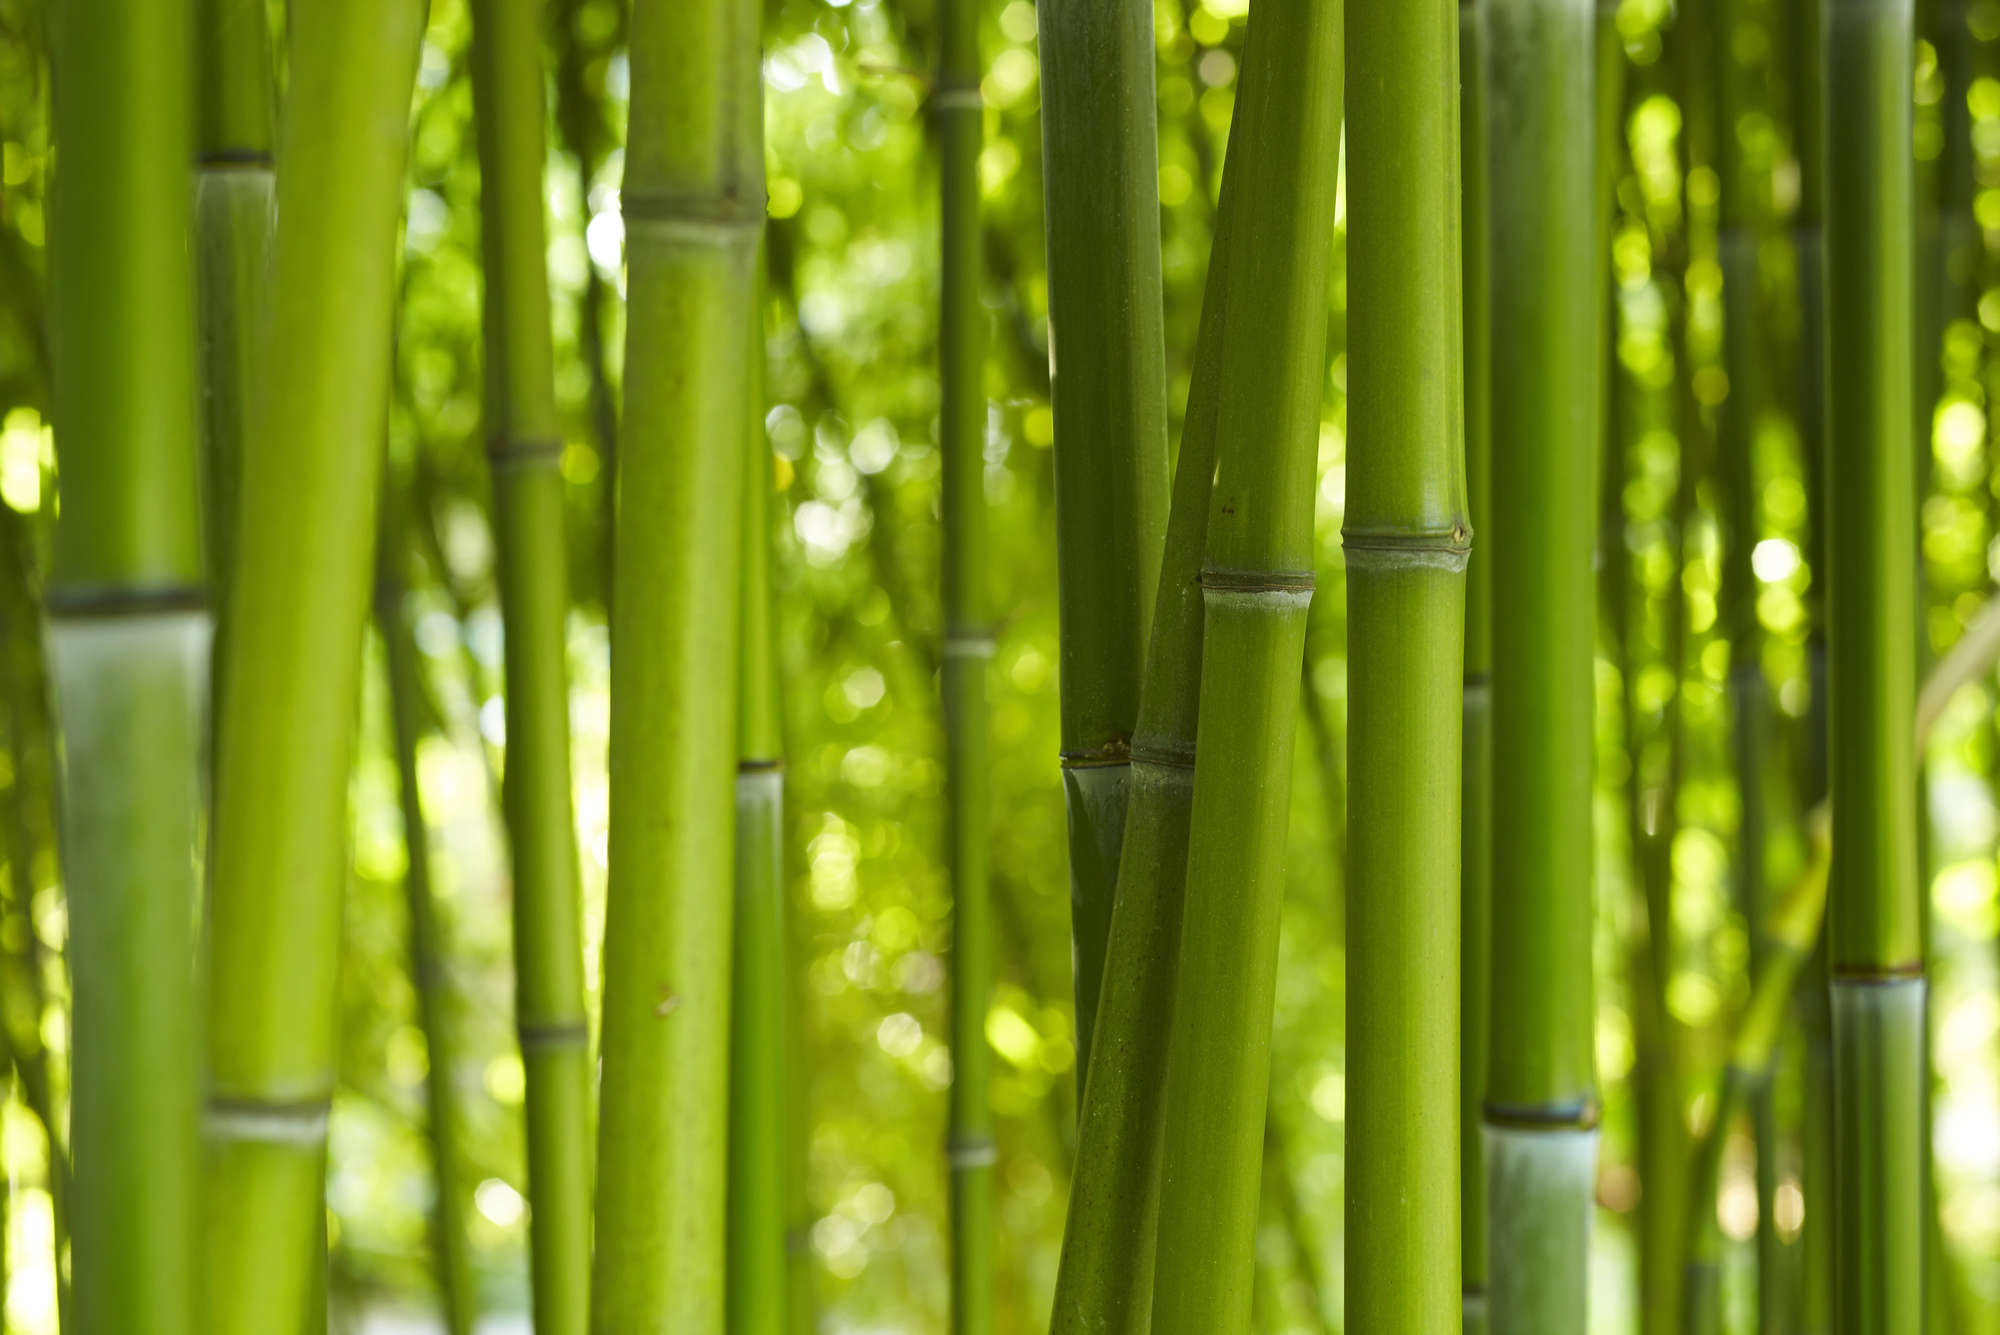             Bamboo in Green Wallpaper - Textured non-woven
        